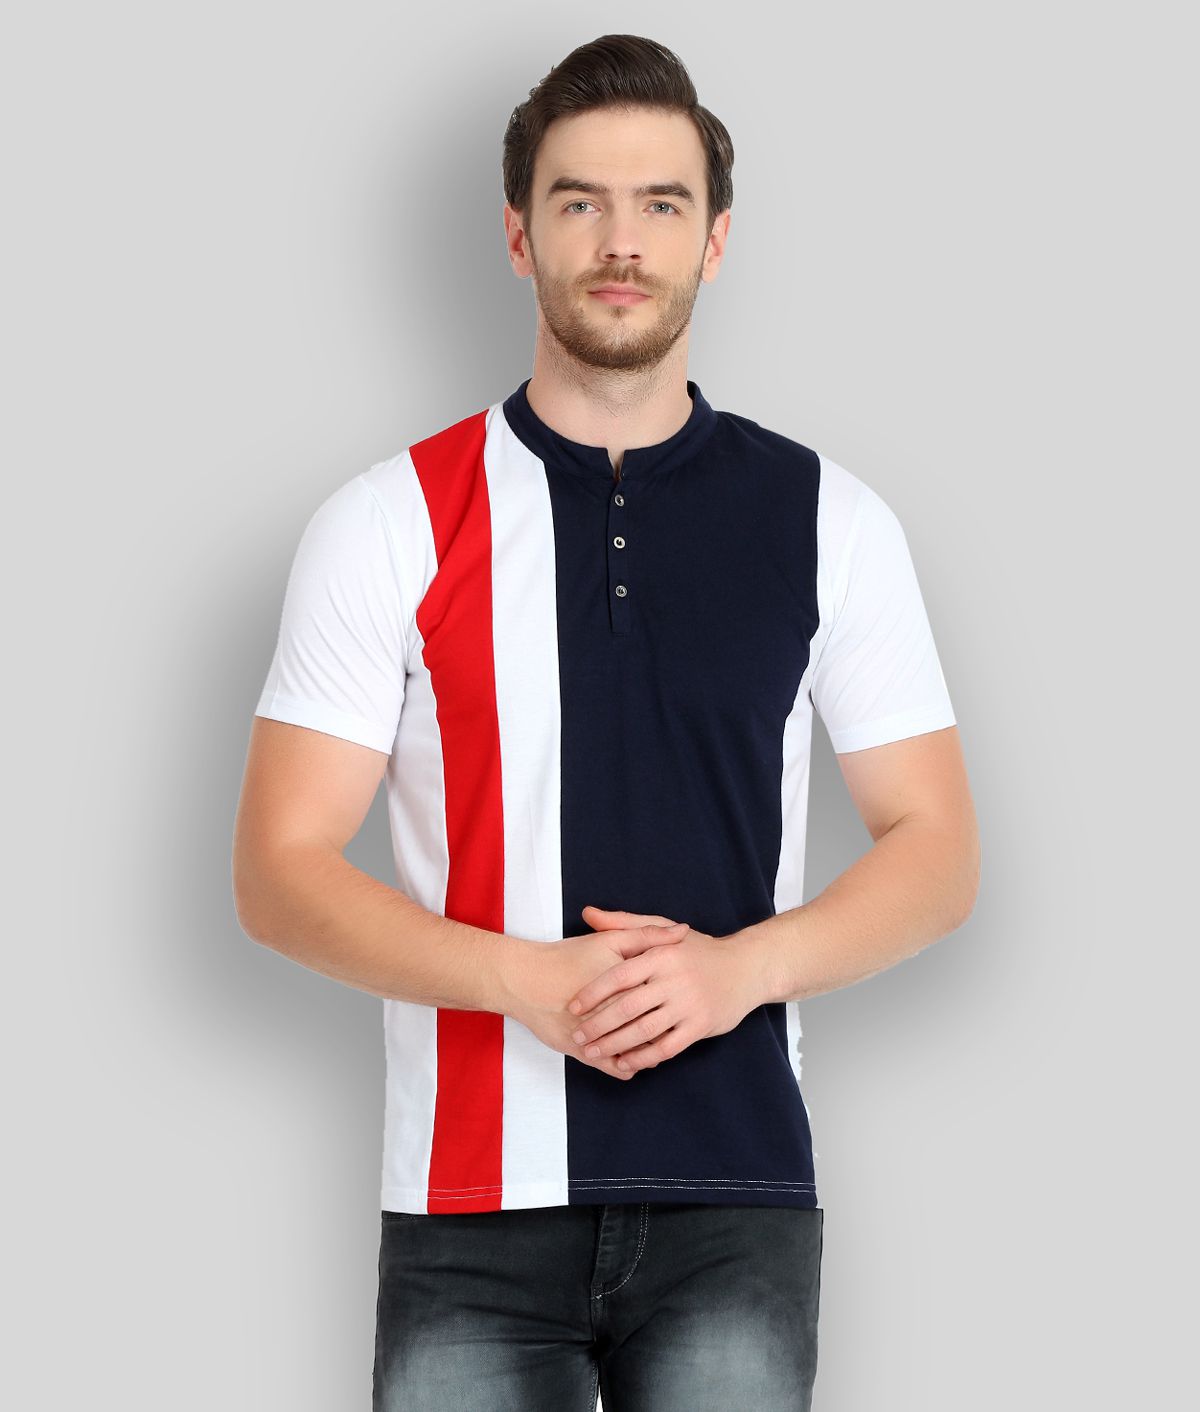     			Glito - Multicolor Cotton Blend Regular Fit Men's T-Shirt ( Pack of 1 )